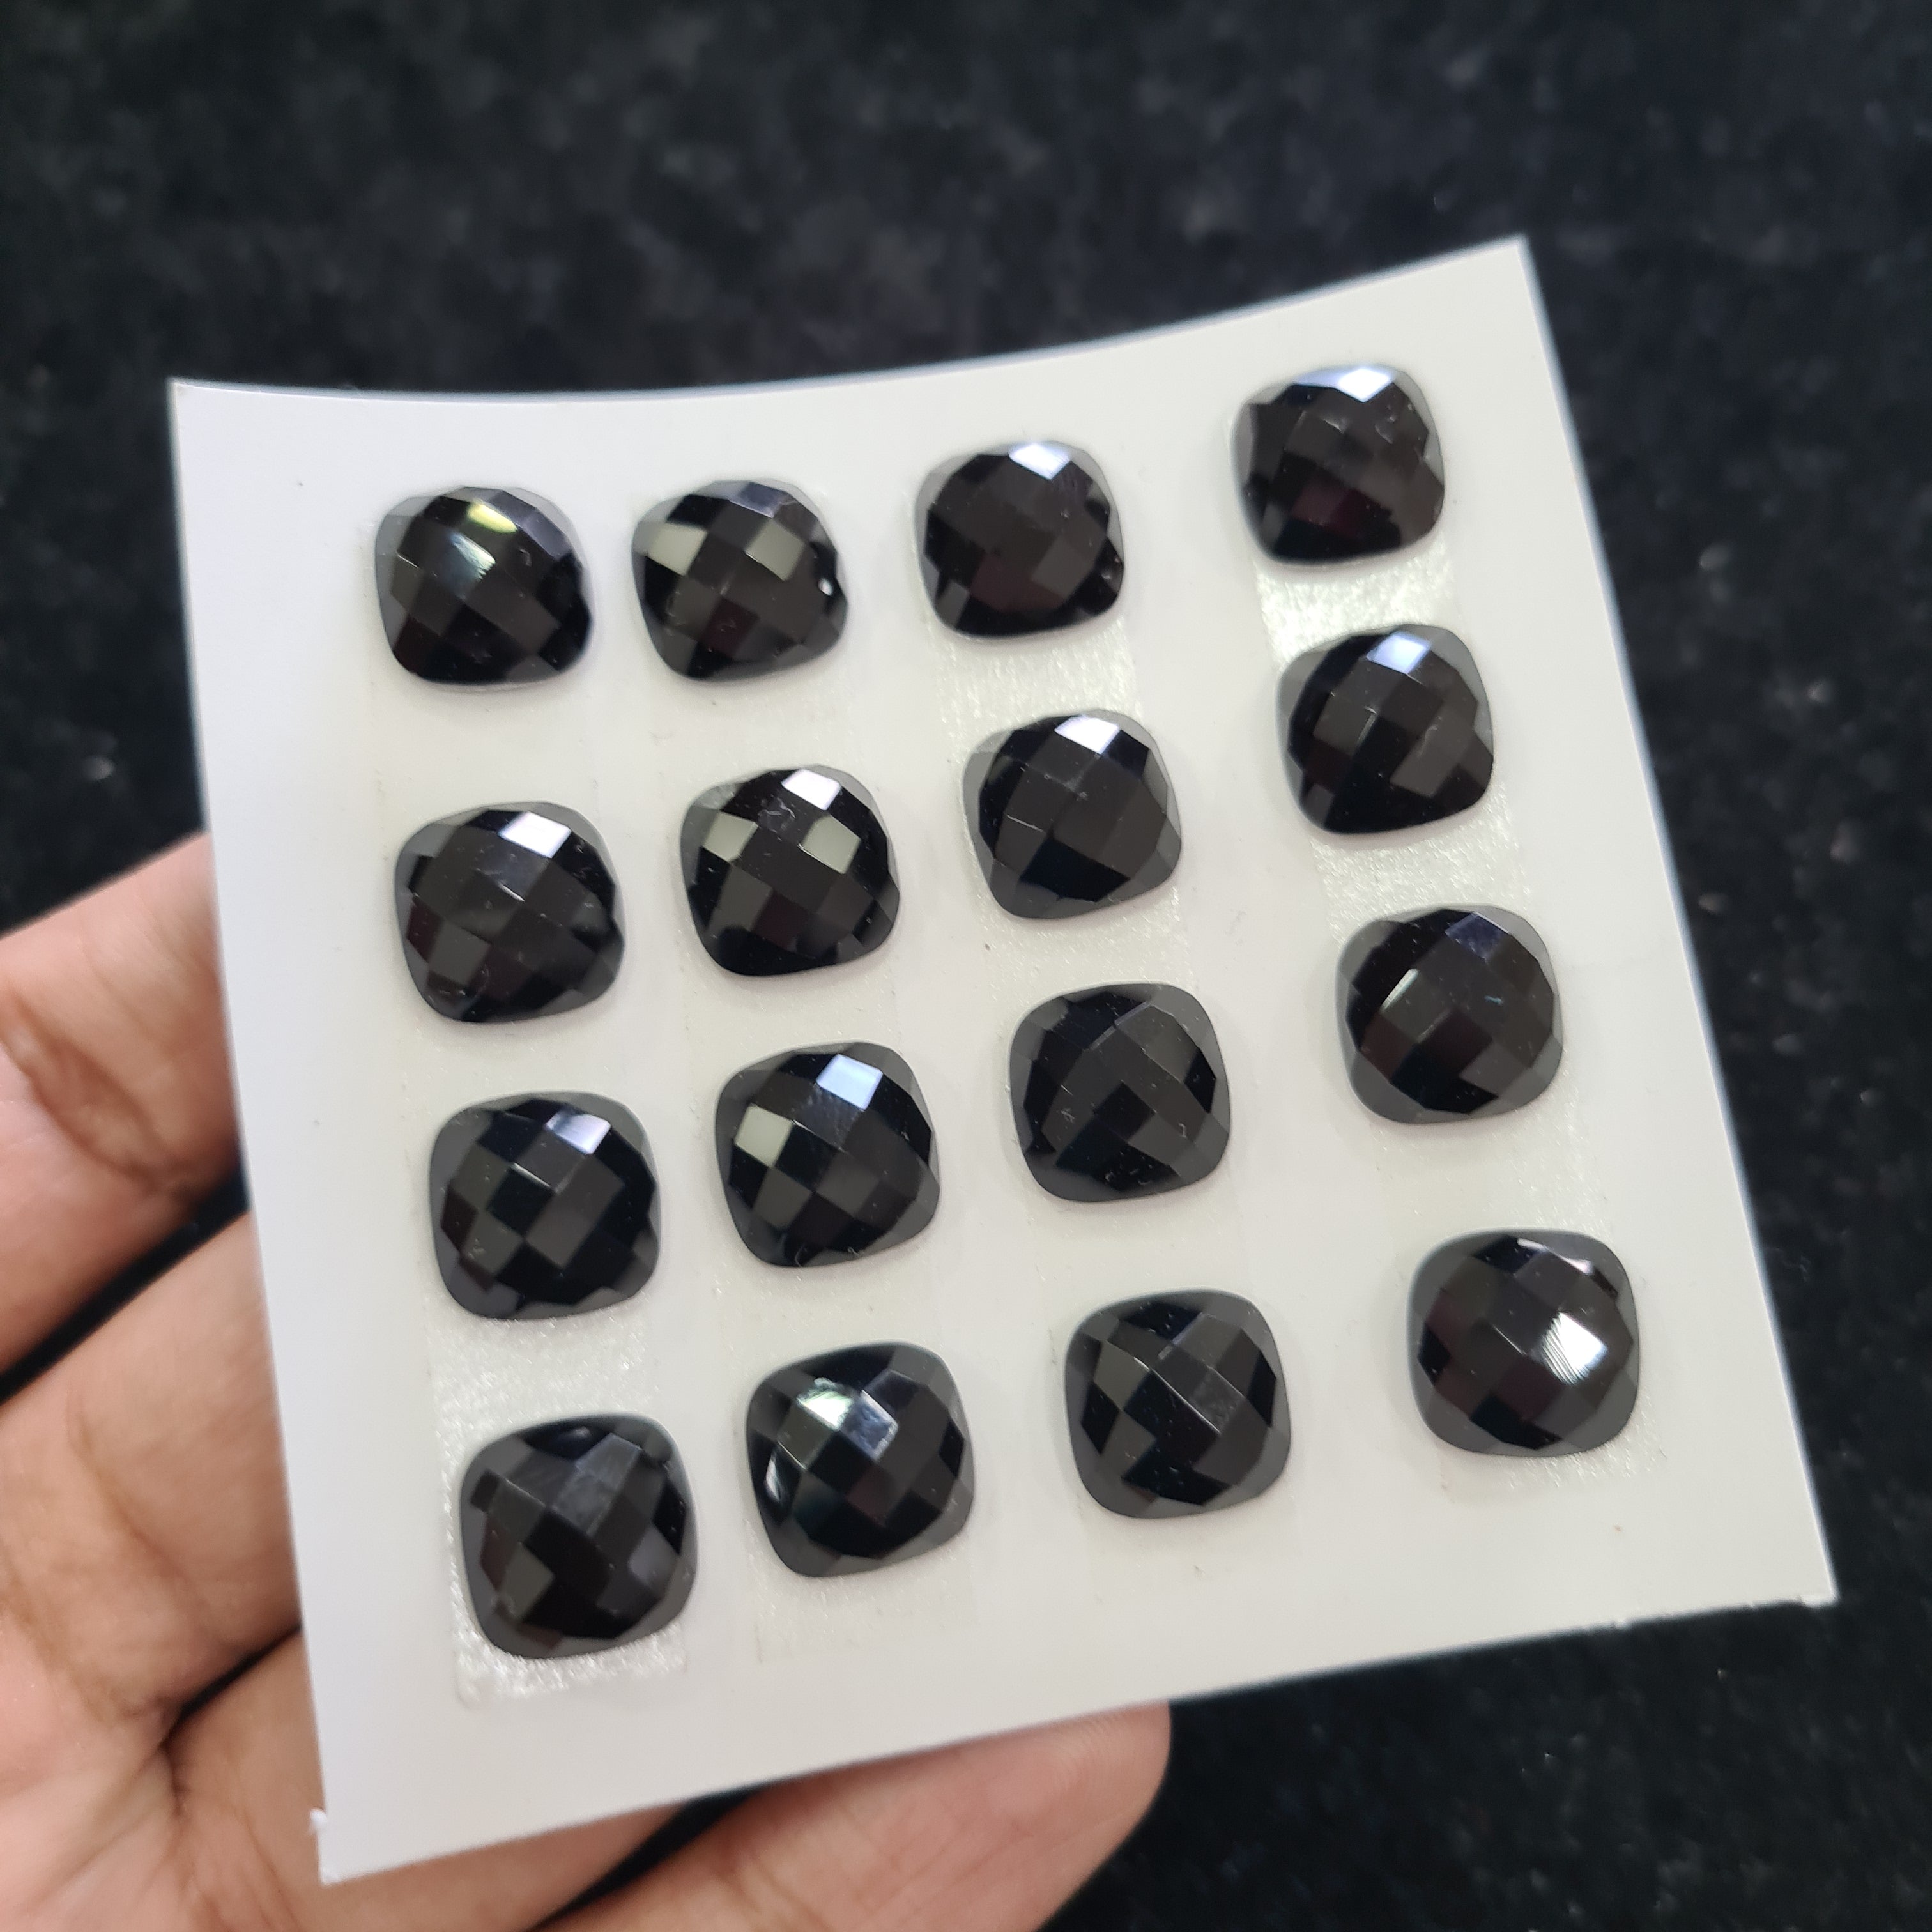 2Unit, 32Pcs Natural Black Onyx Rosecut Gemstones | Square Shape, 12mm Size, - The LabradoriteKing